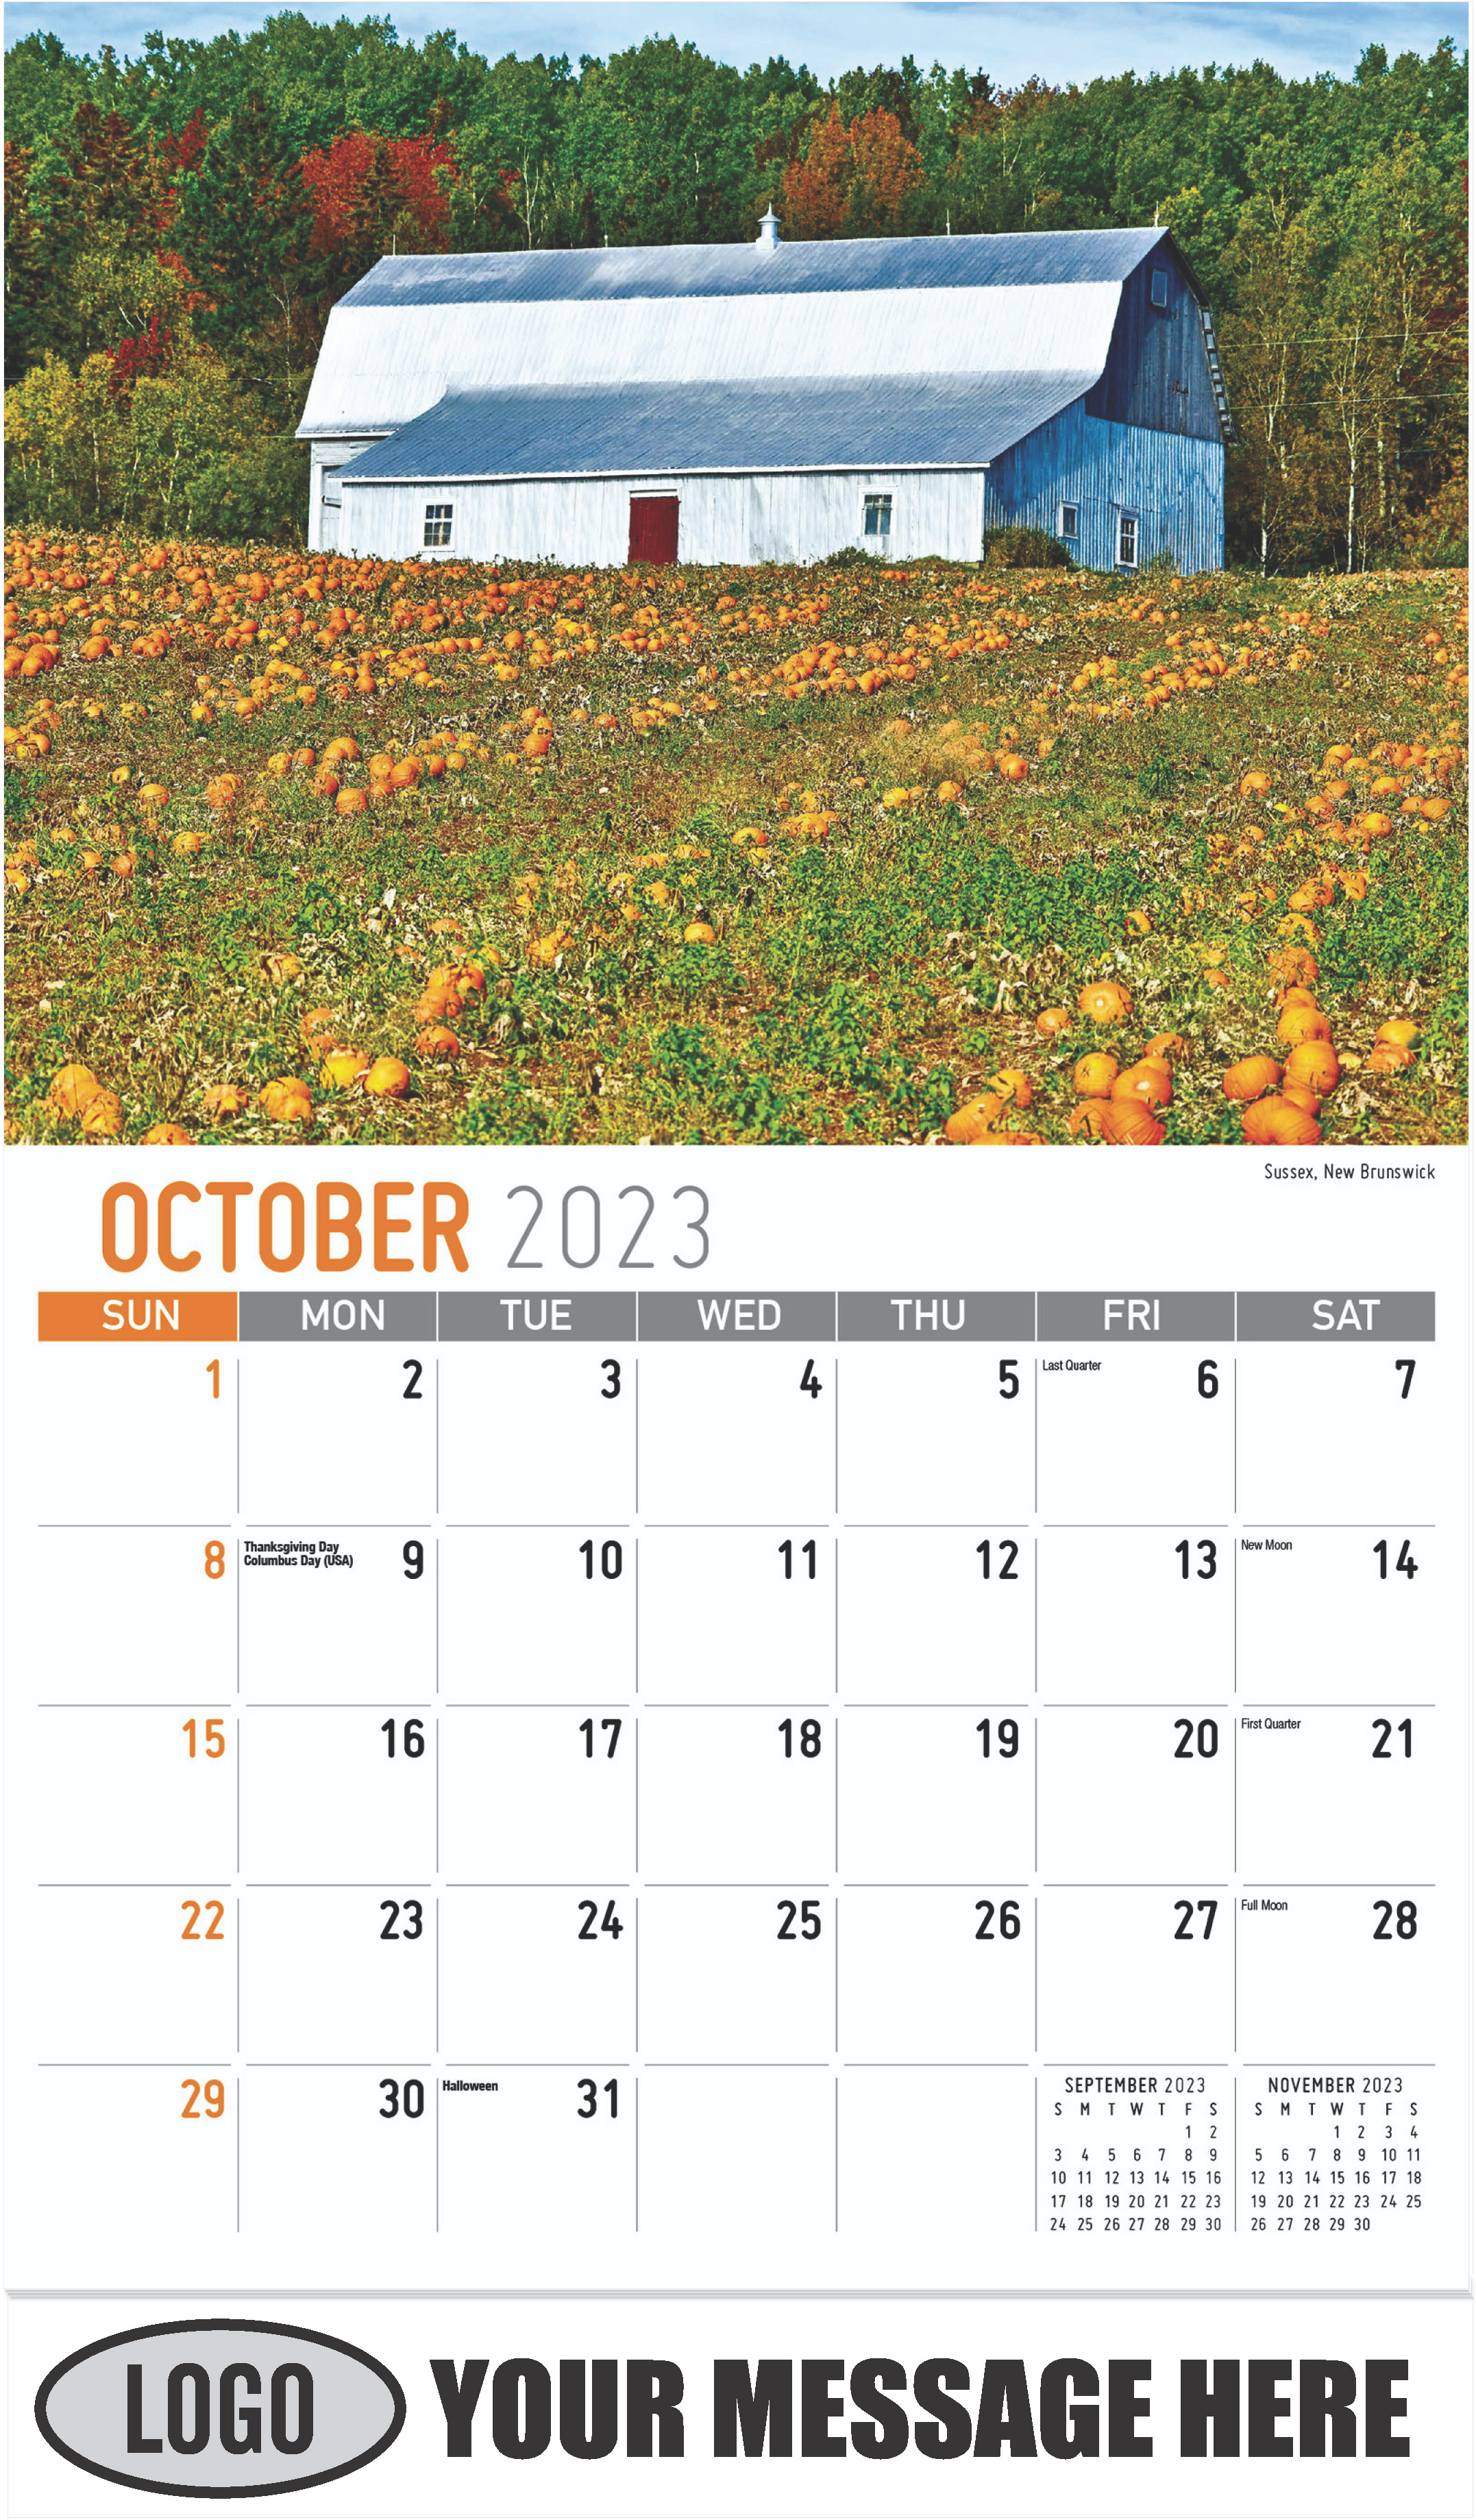 Sussex, New Brunswick - October - Atlantic Canada 2023 Promotional Calendar